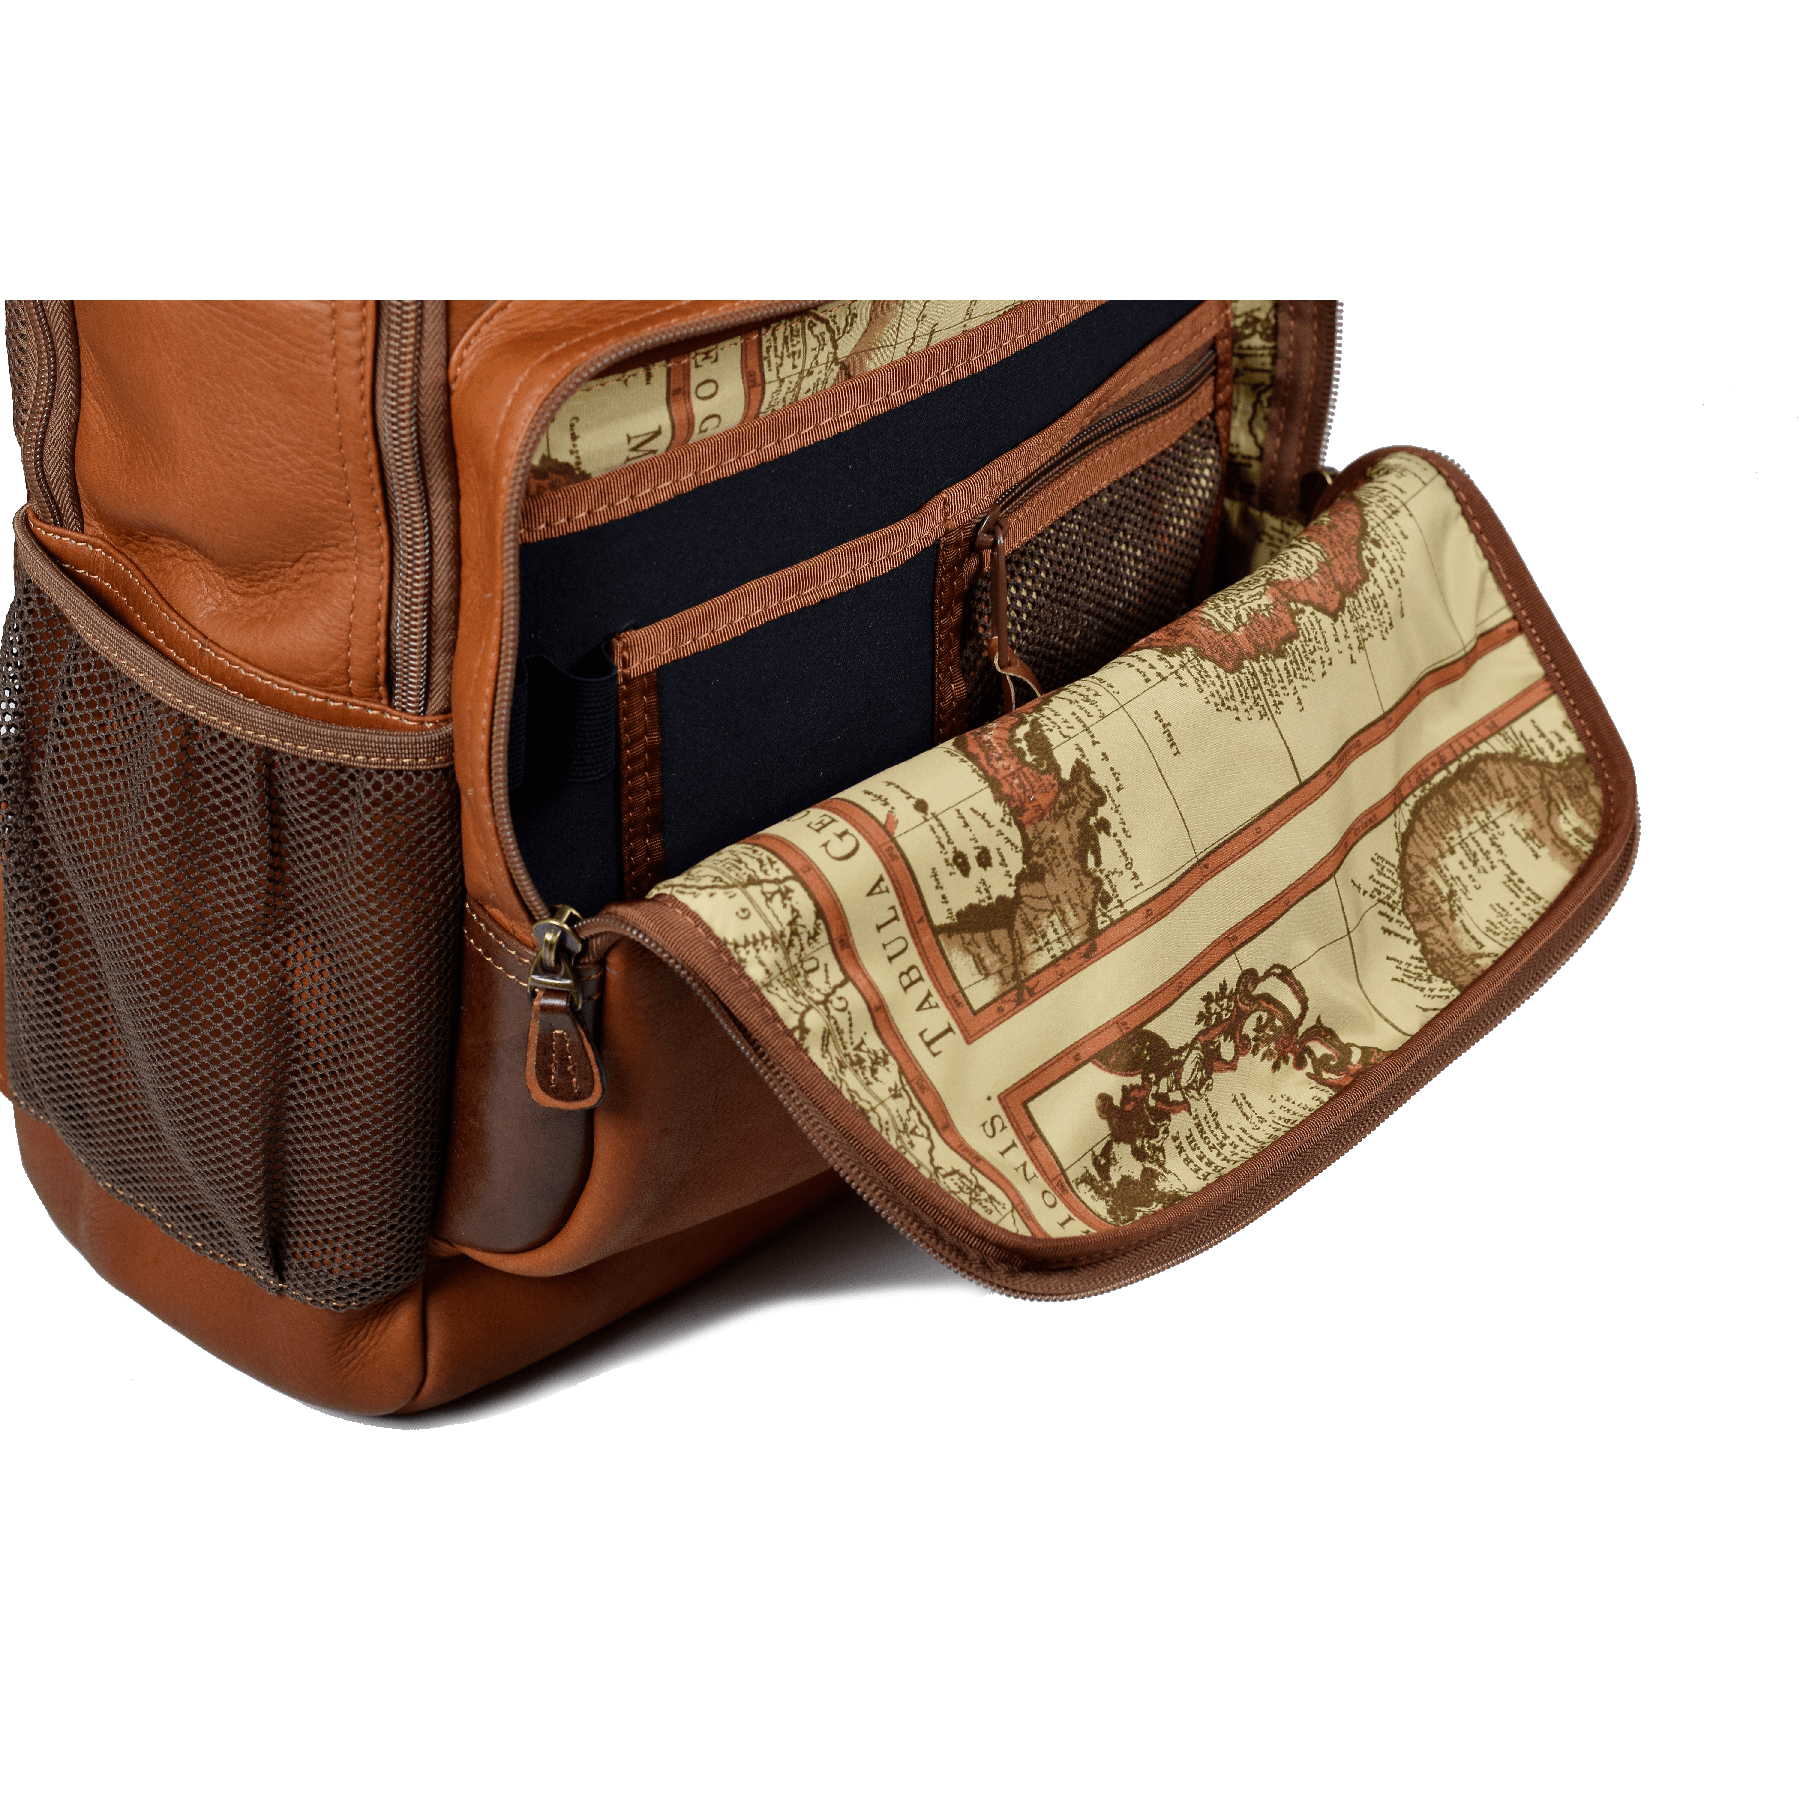 Santa Fe Odyssey Backpack - LAND Leather Goods